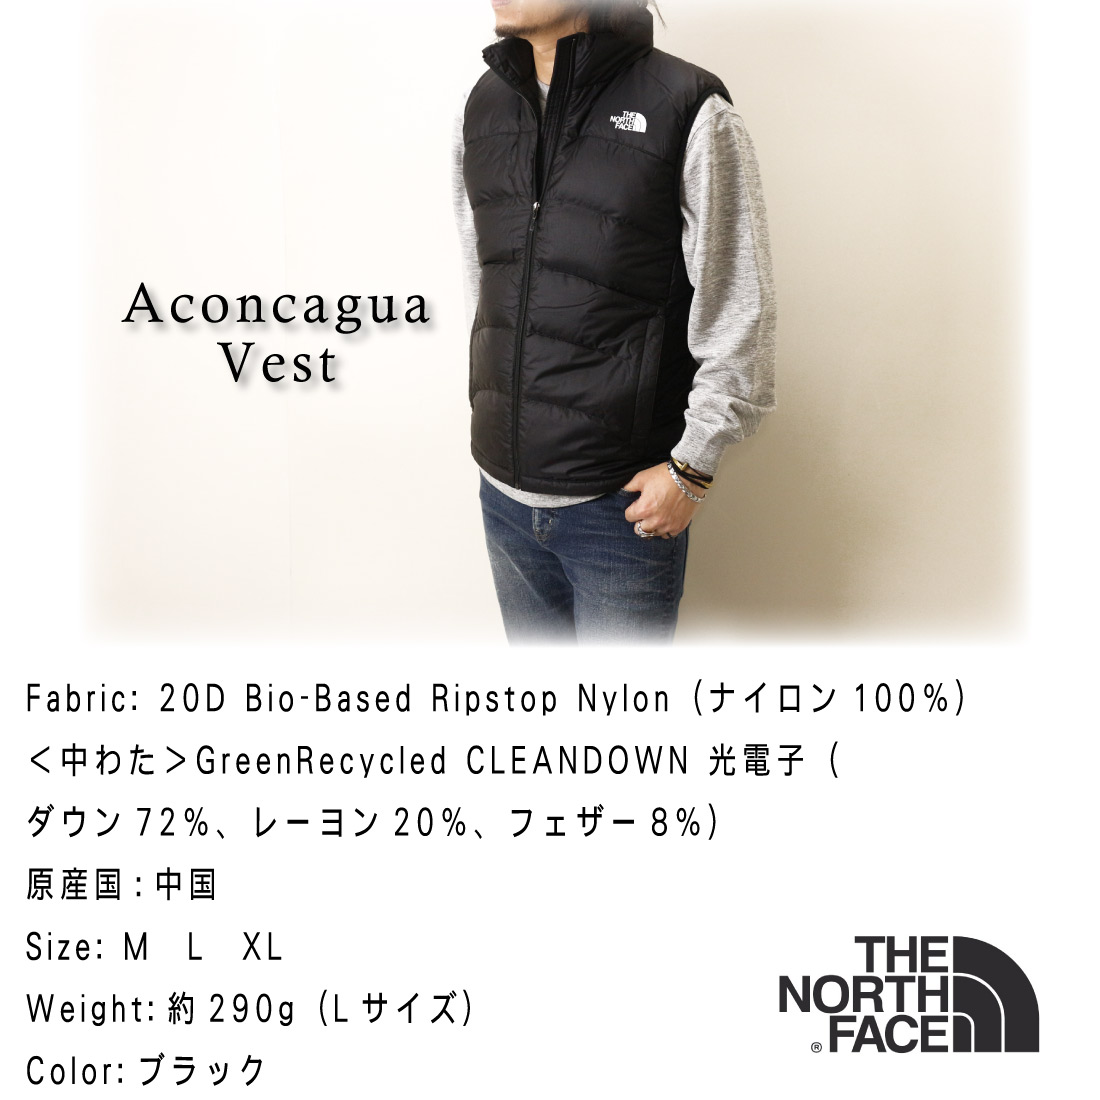 HE NORTH FACE ザ ノースフェイス ND92243 Aconcagua Vest 